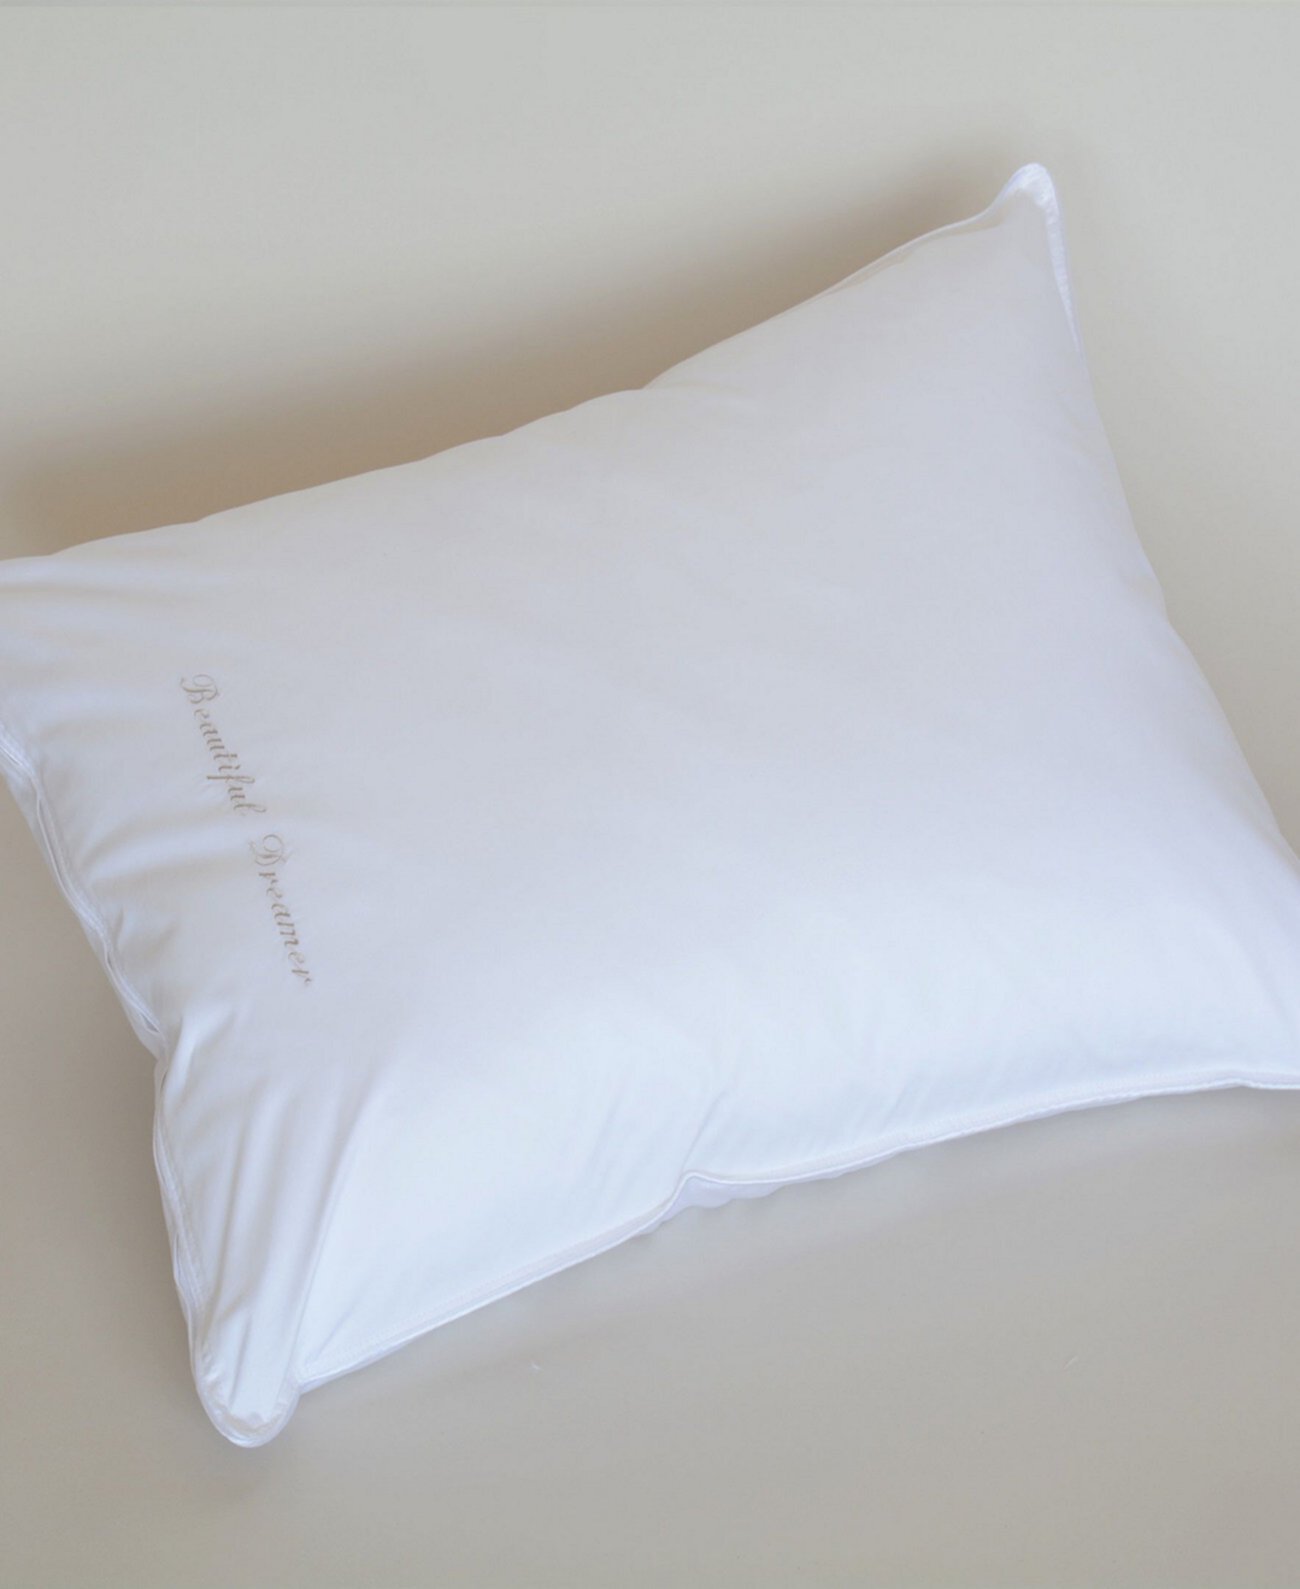 Пуховая альтернативная подушка для сна с кроватью размера "king-size" The Pillow Bar